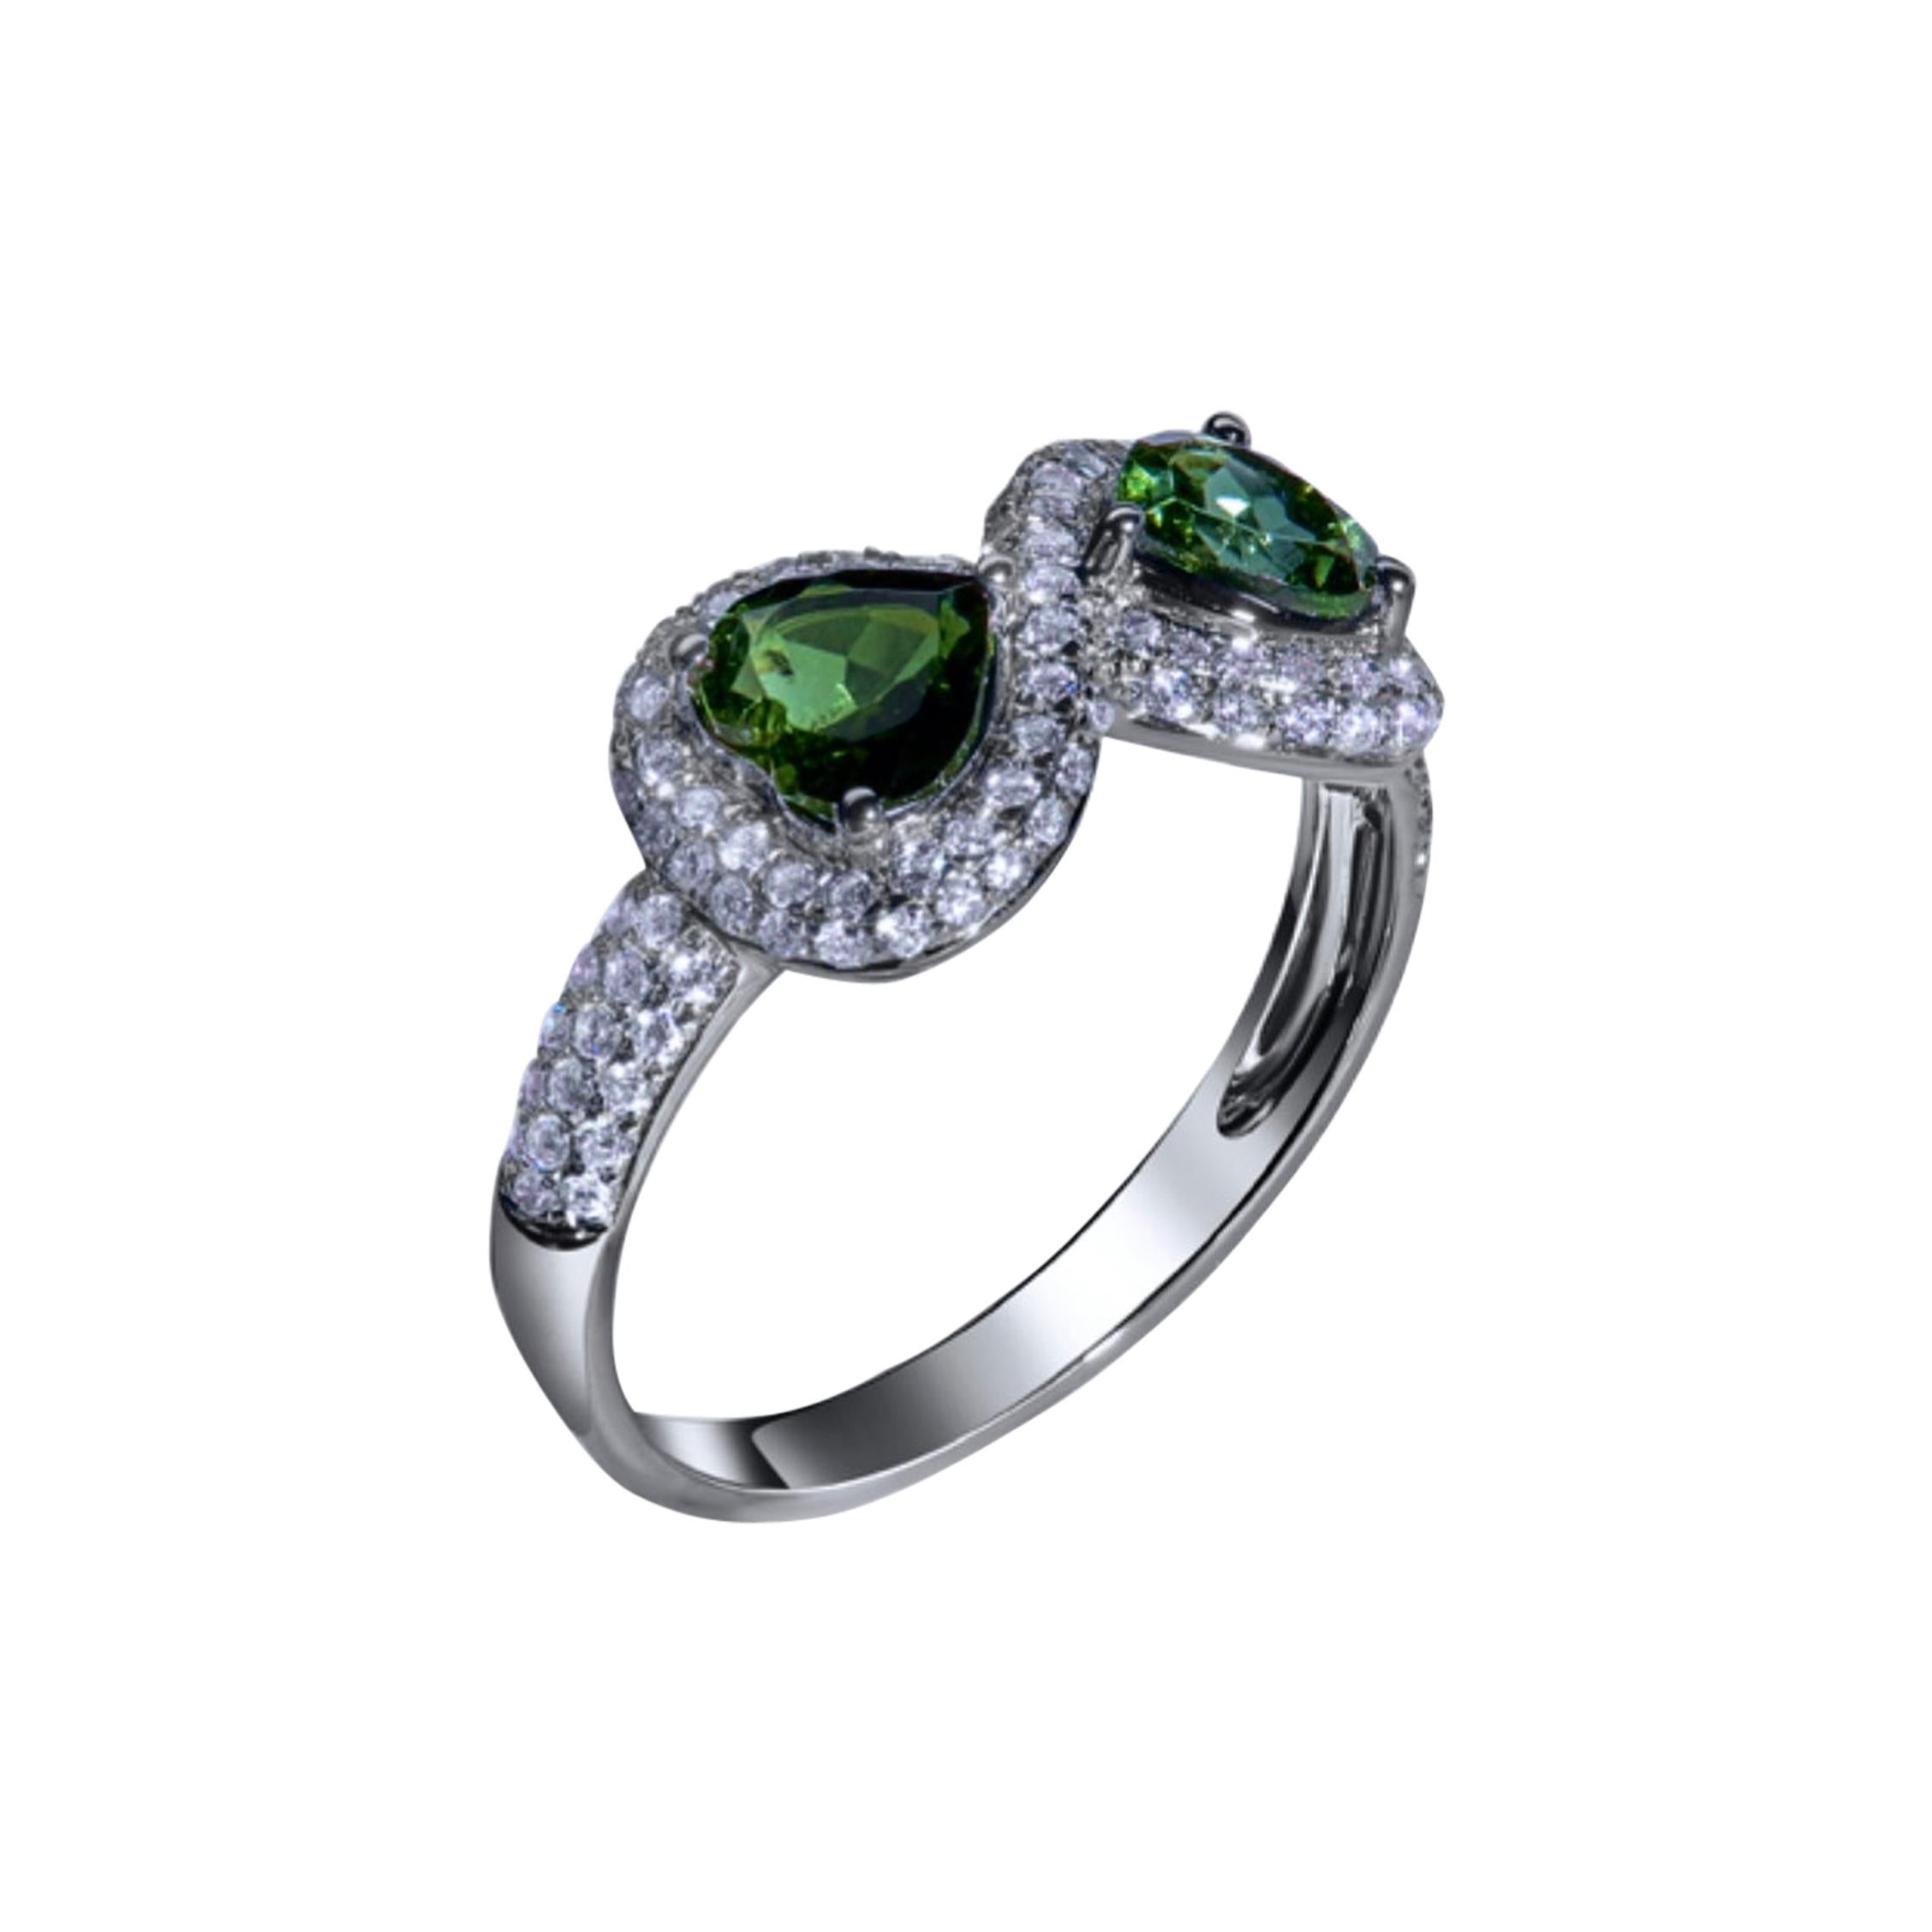 “Infinite Eight of Hearts” Diamonds and Green Tourmaline Hearts Ring